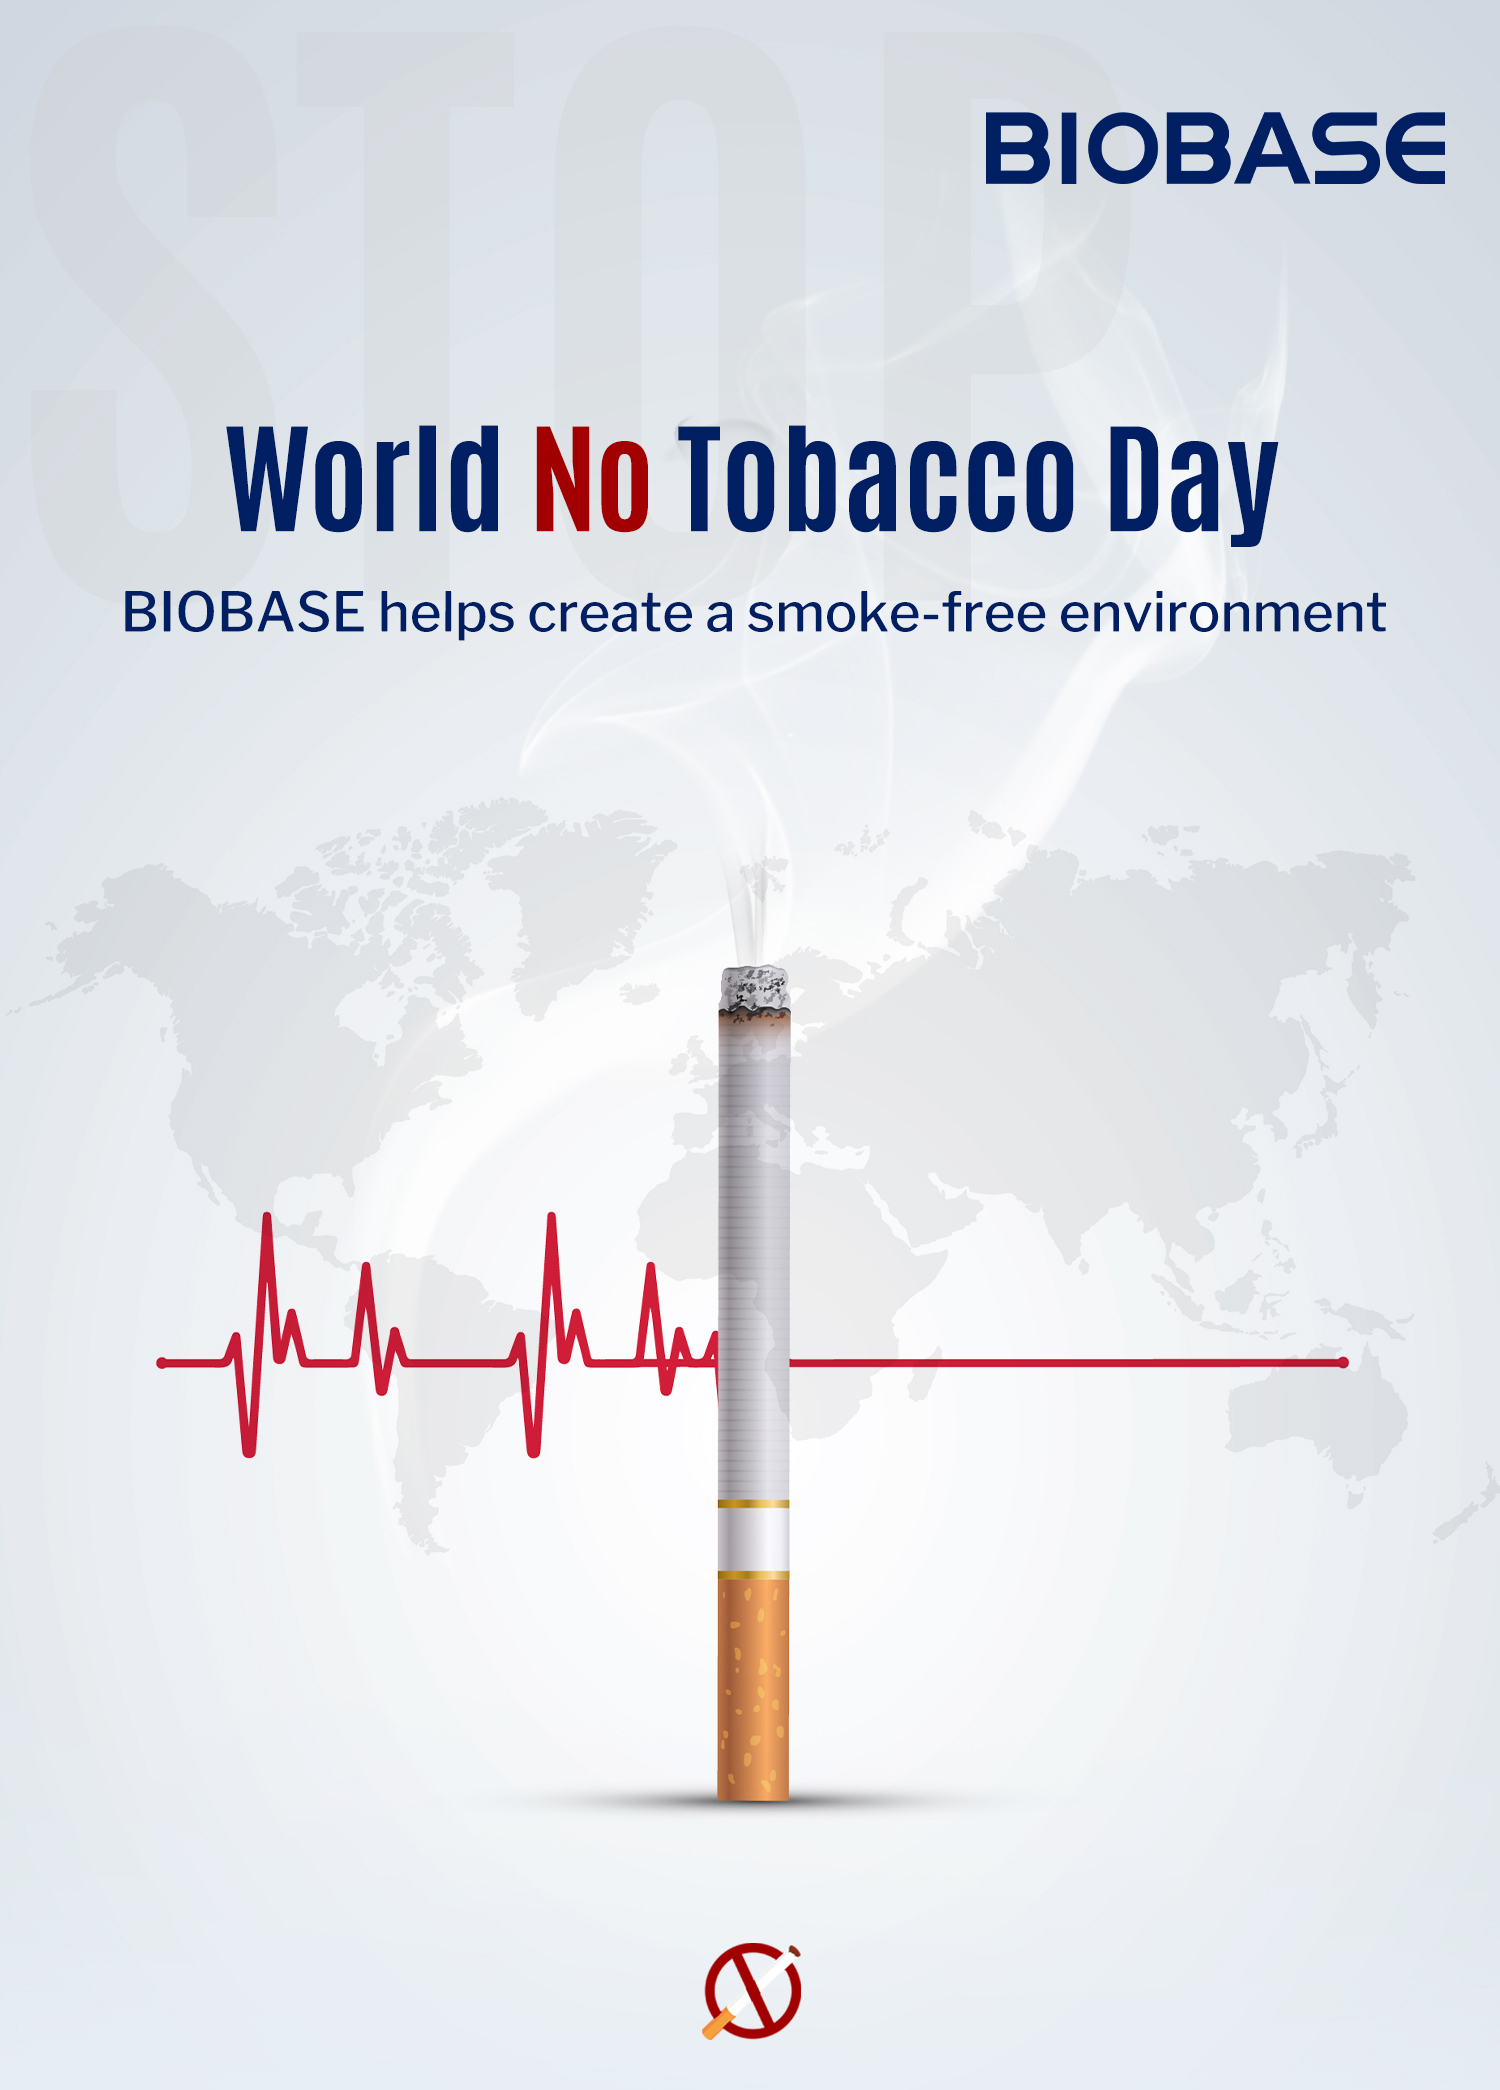 BIOBASE helps create a smoke-free environment